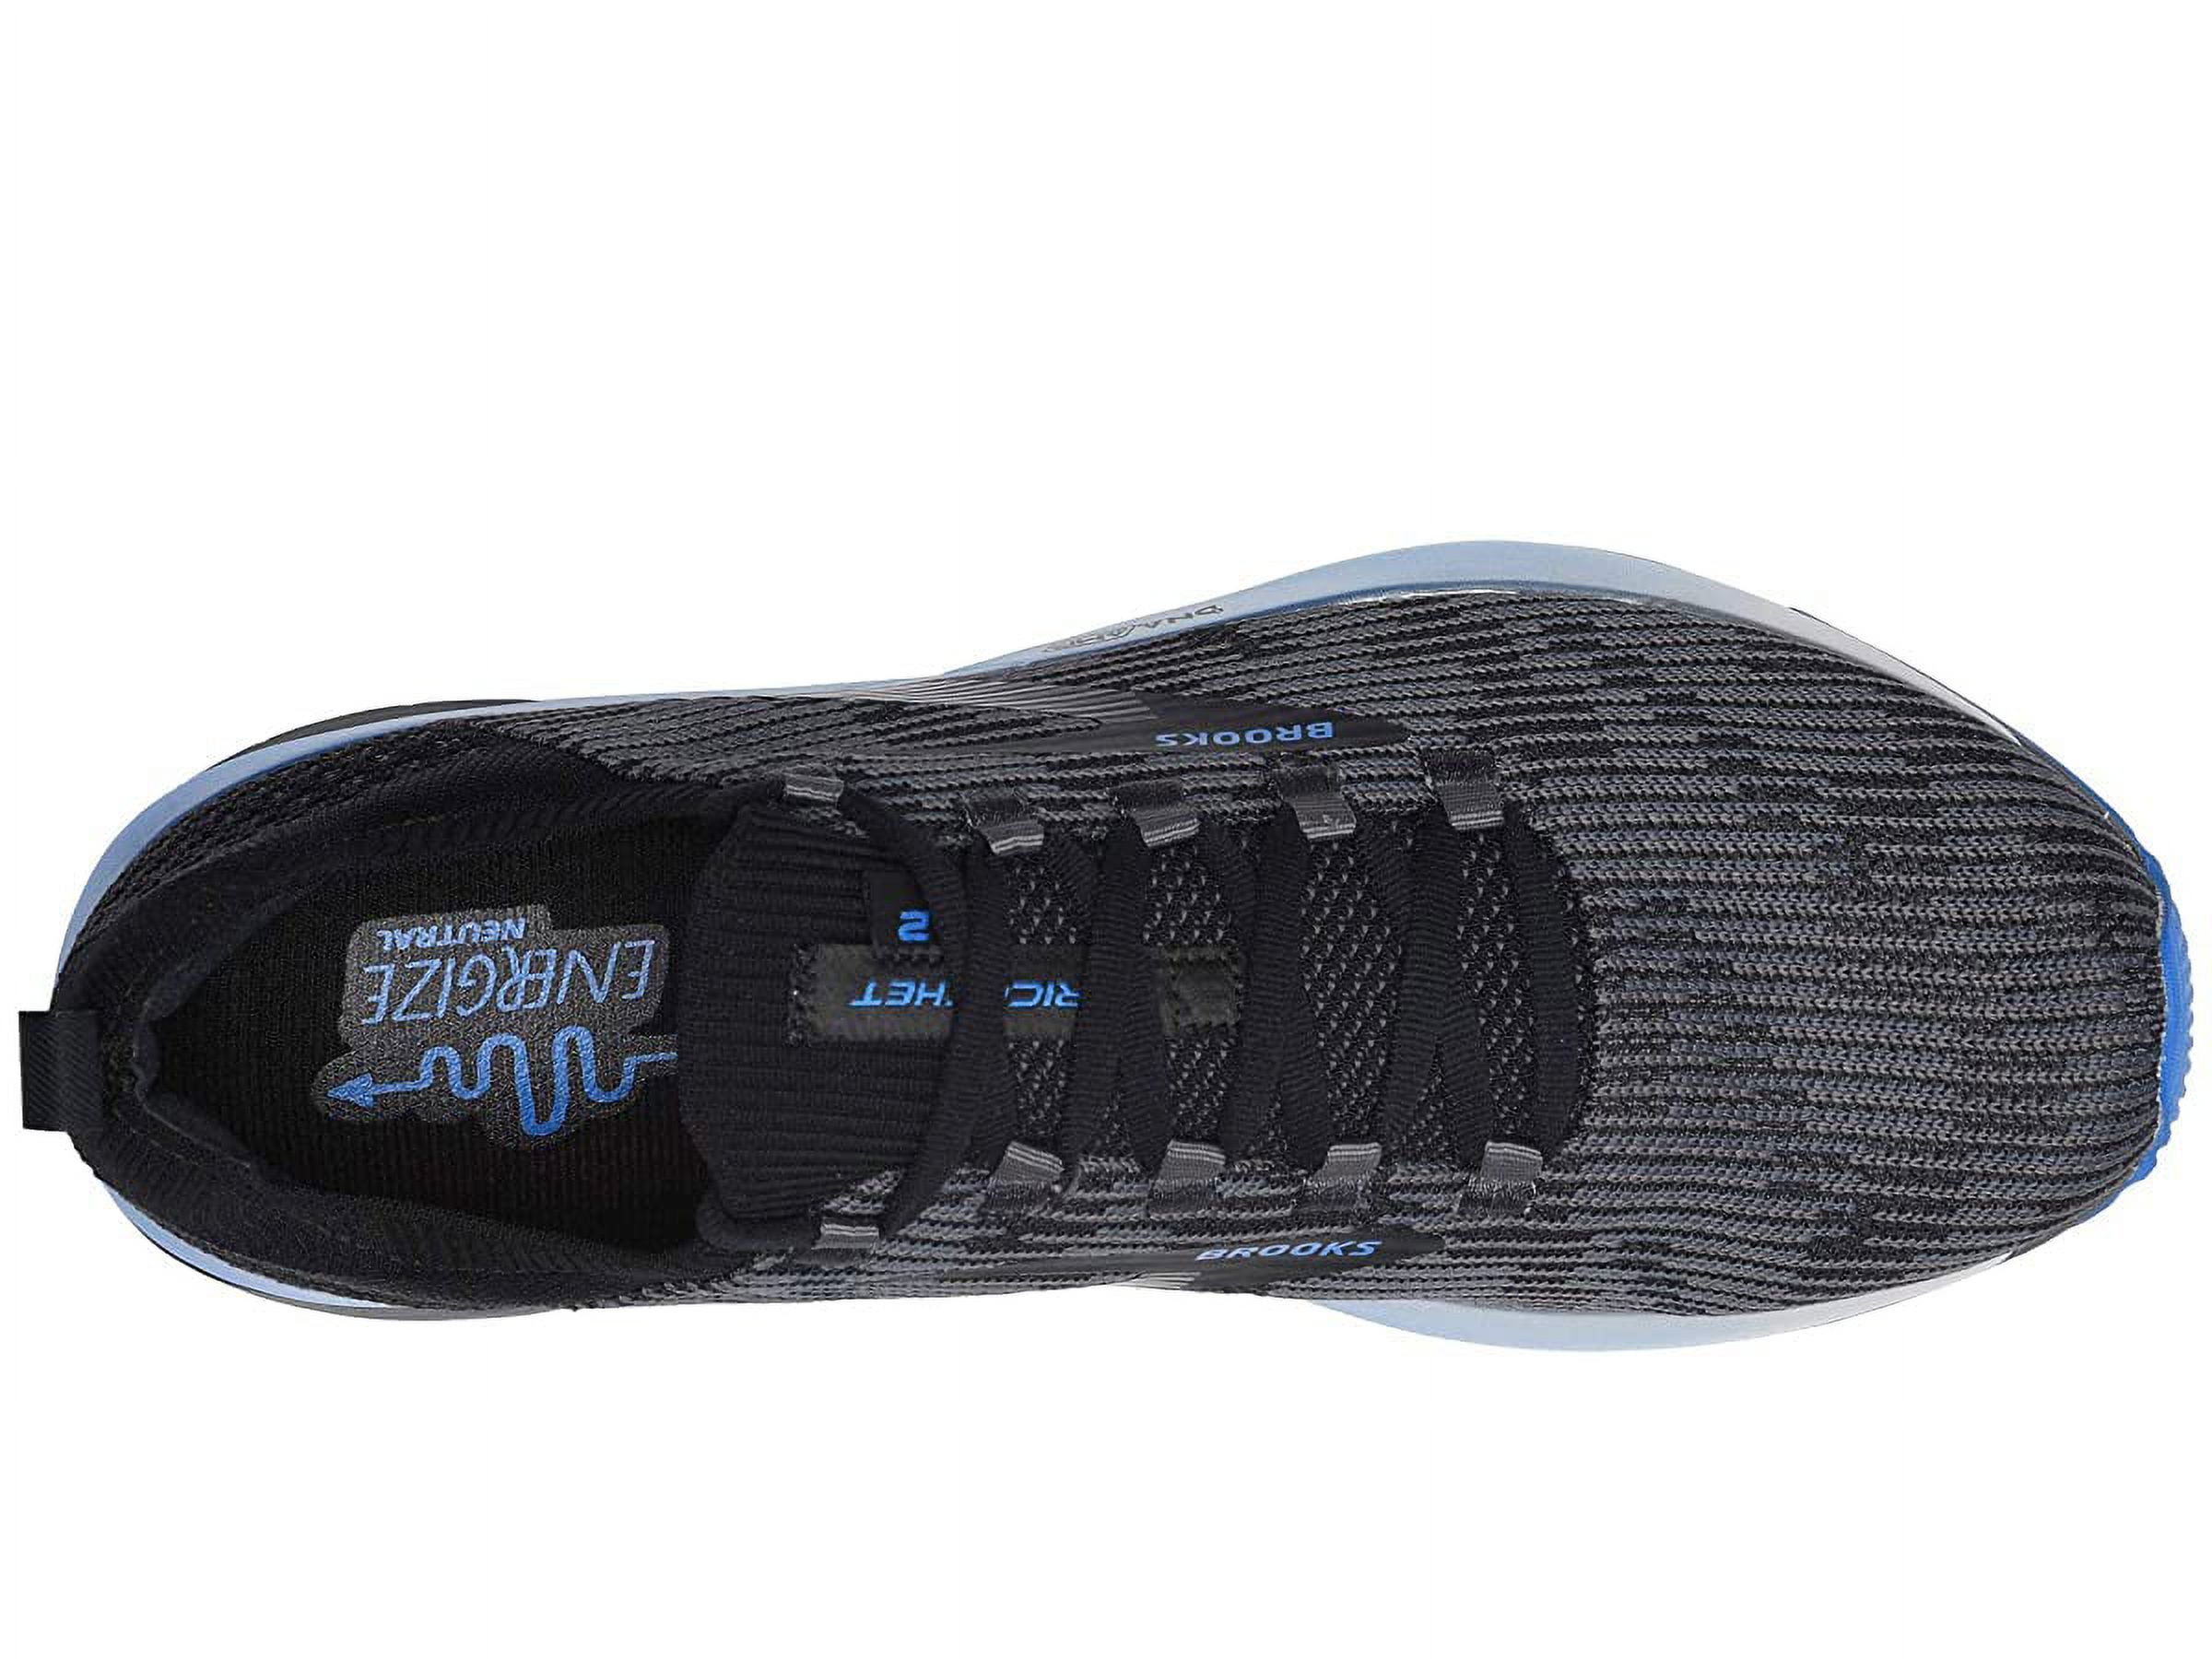 Brooks Men's Ricochet 2 Running Shoe, Black/Multi, 9.5 D(M) US - image 4 of 6